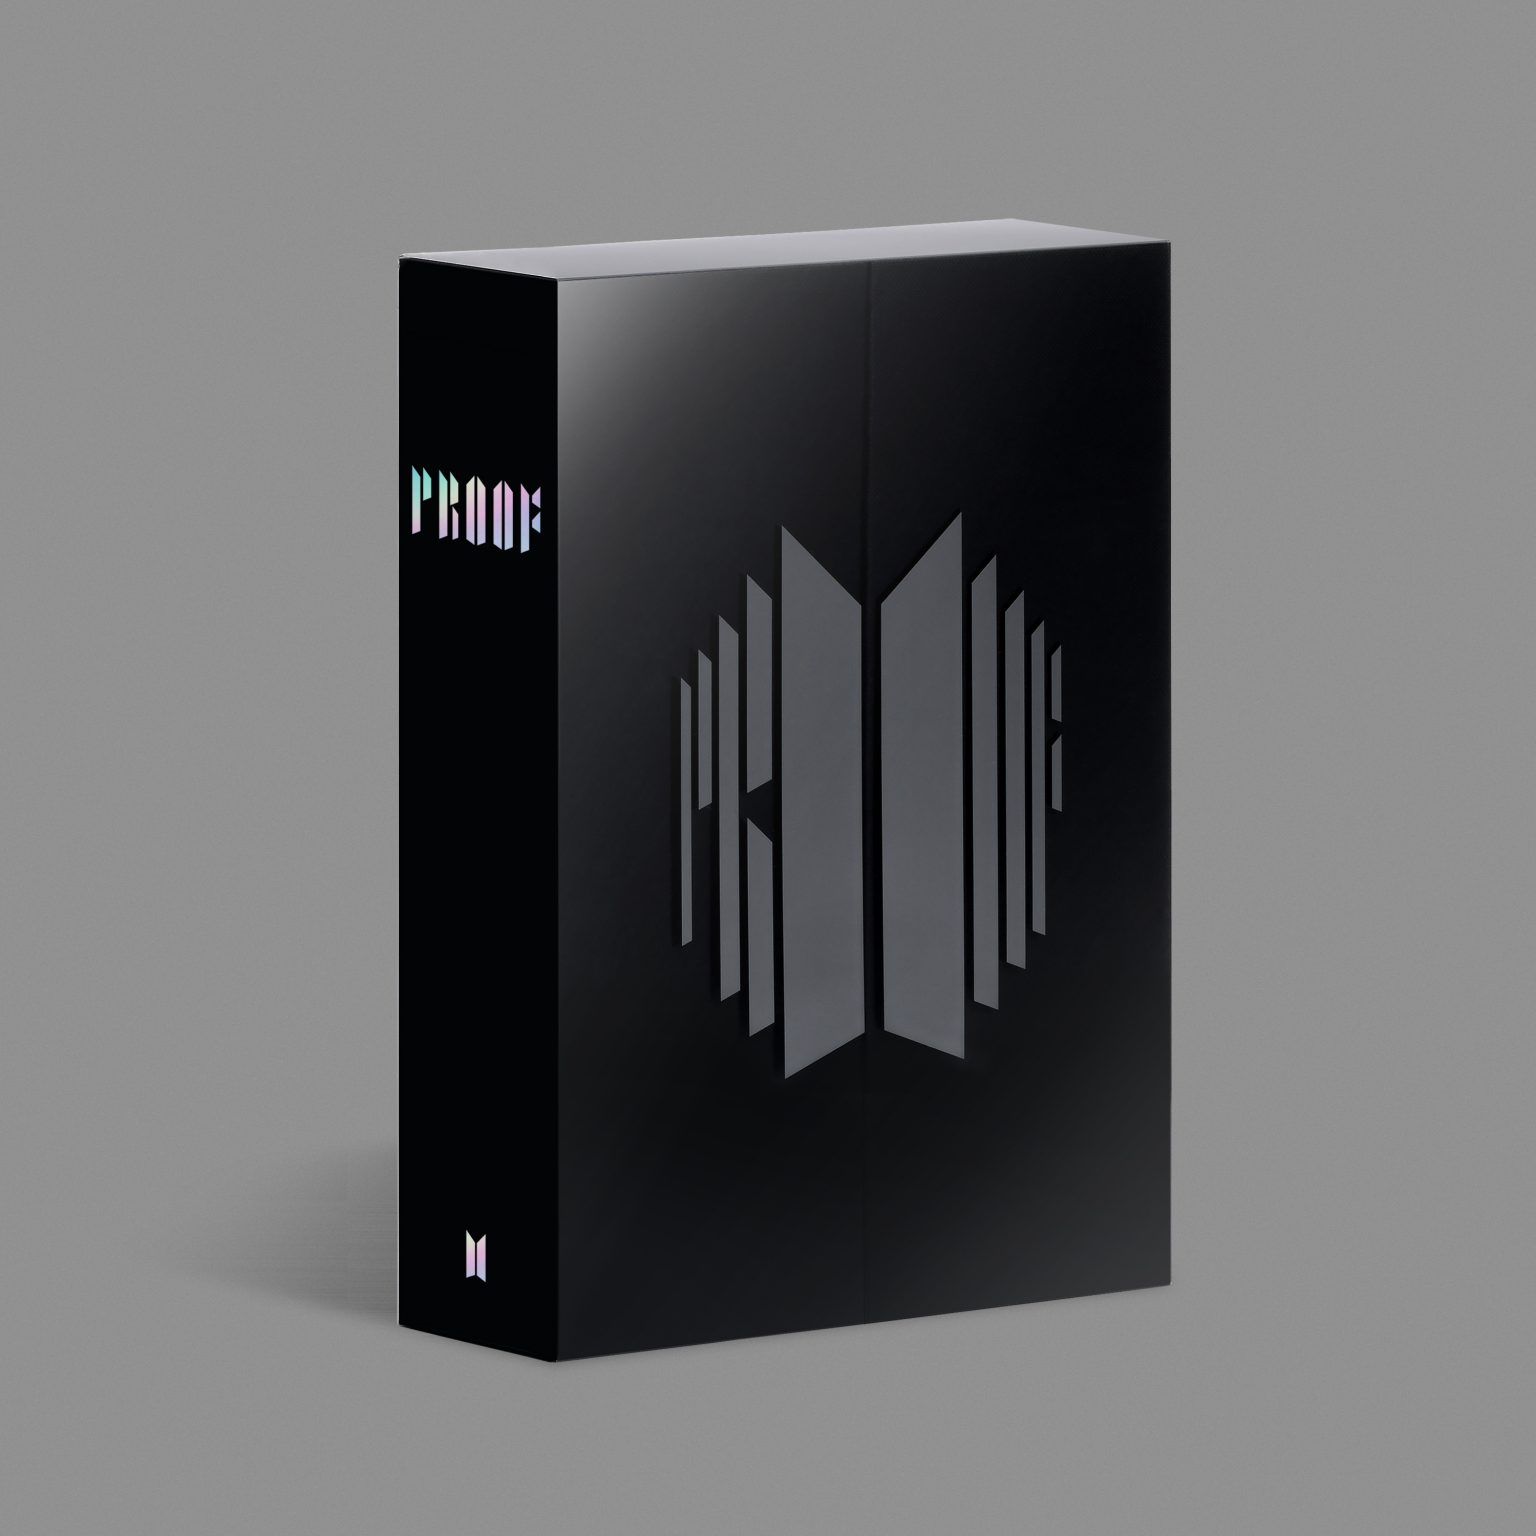 BTS Announce New Album ‘Proof’ Coming in June